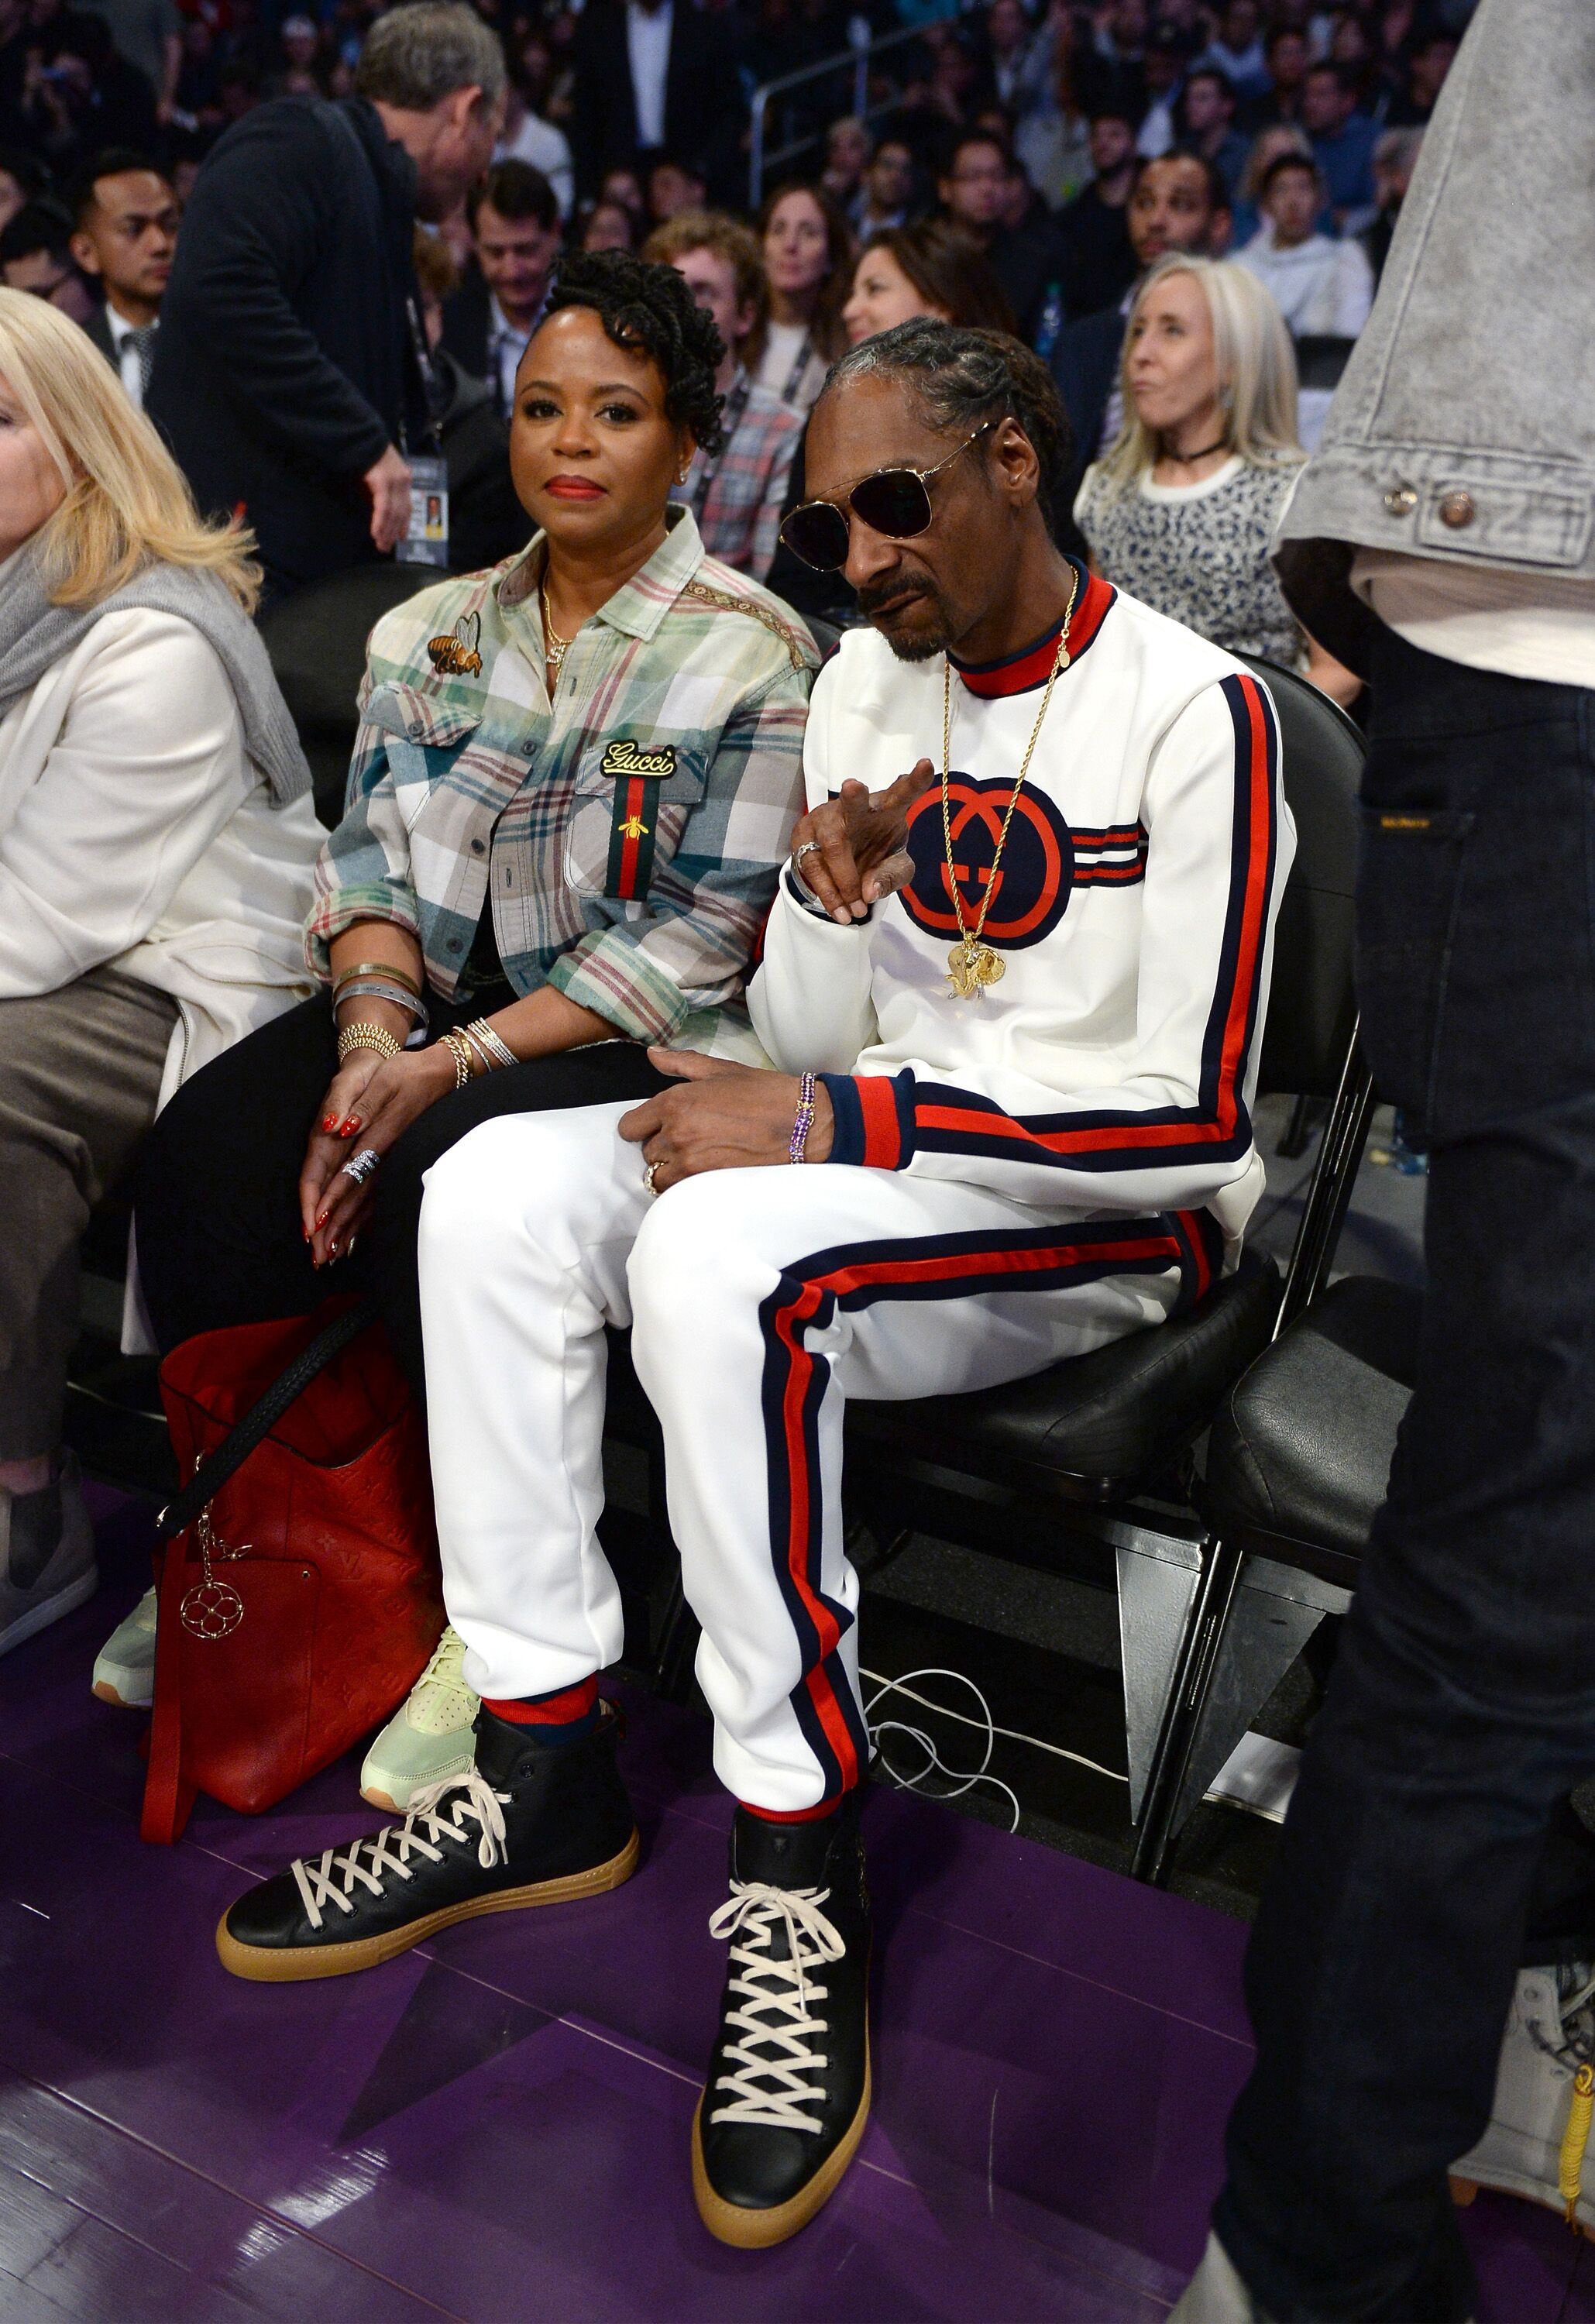 Snoop Dogg and Shante Broadus enjoying an NBA game | Source: Getty Images/GlobalImagesUkraine